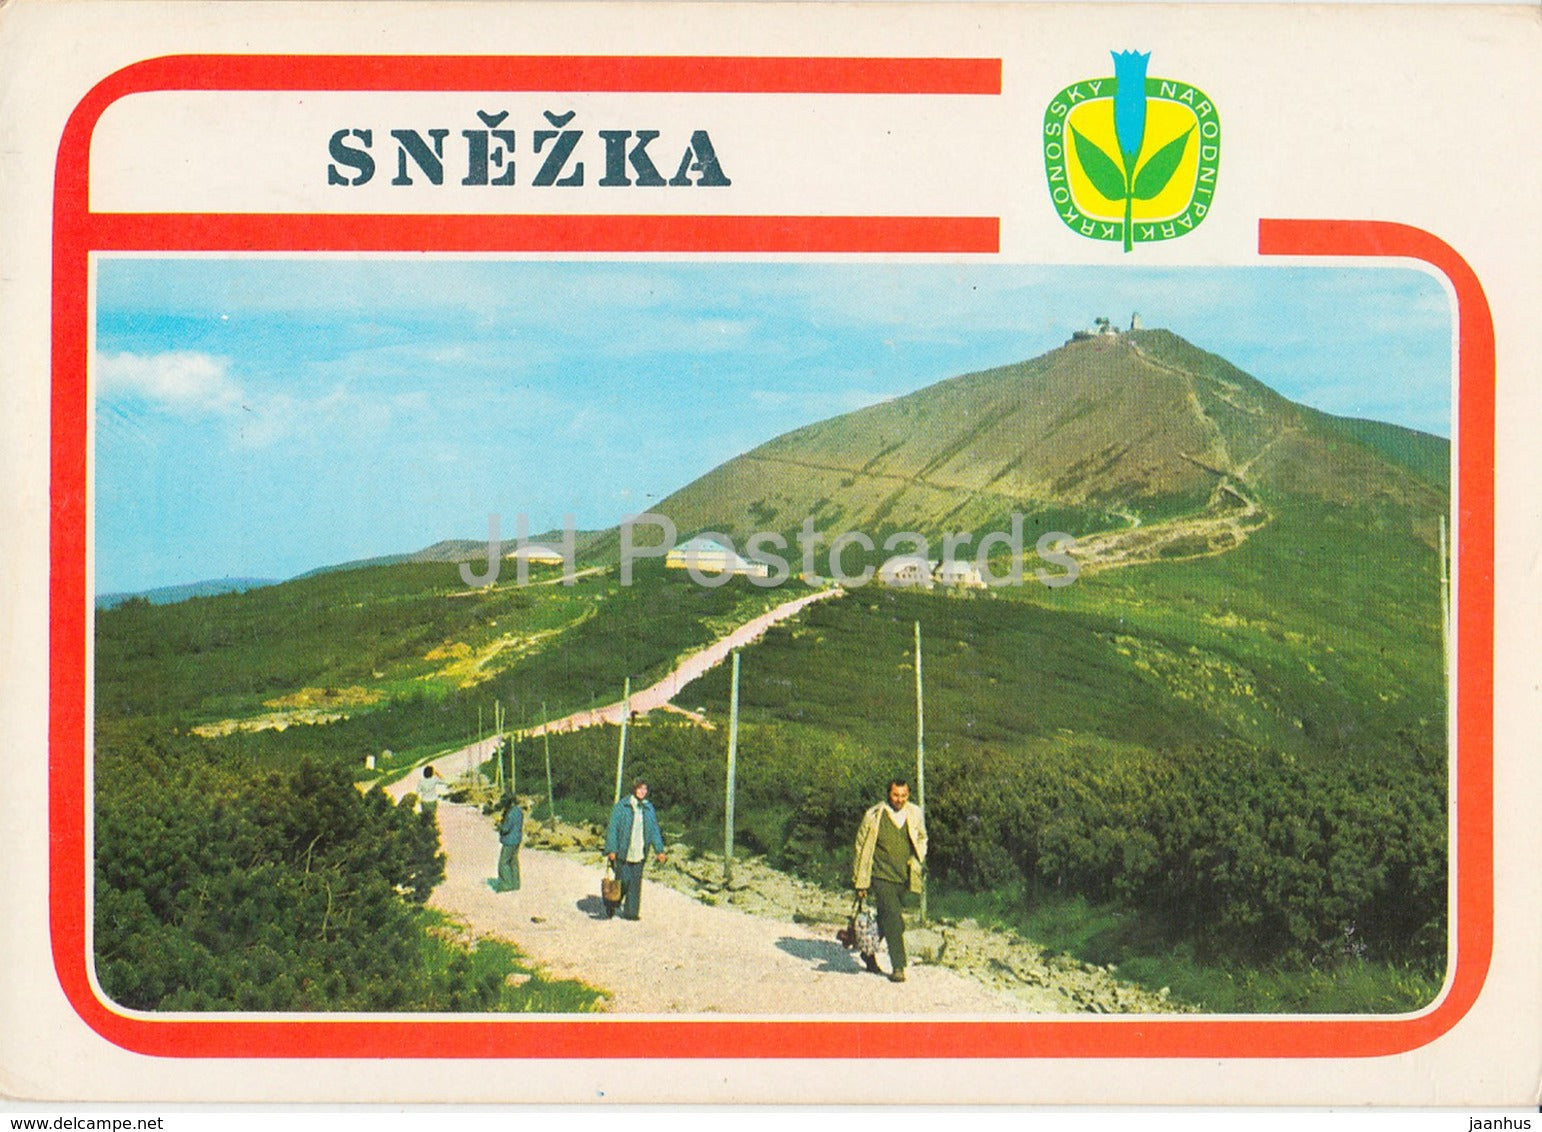 Snezka 1602 m - Highest Peak of the Giant Mountains - Czechoslovakia - Czech Republic - used - JH Postcards